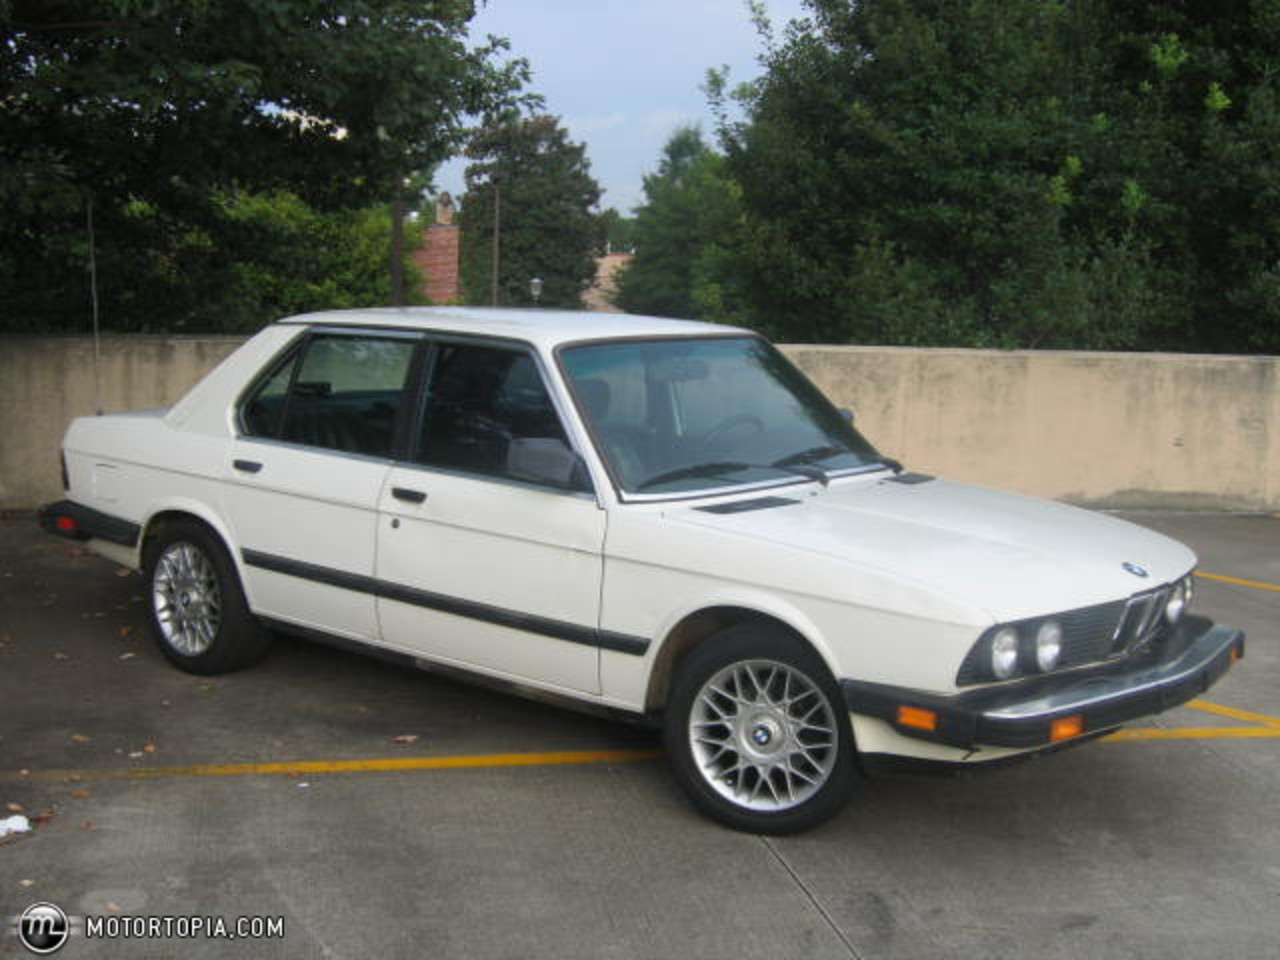 Photo of a 1988 BMW 528e (e28). 9,408 views; 2 comments; forward car